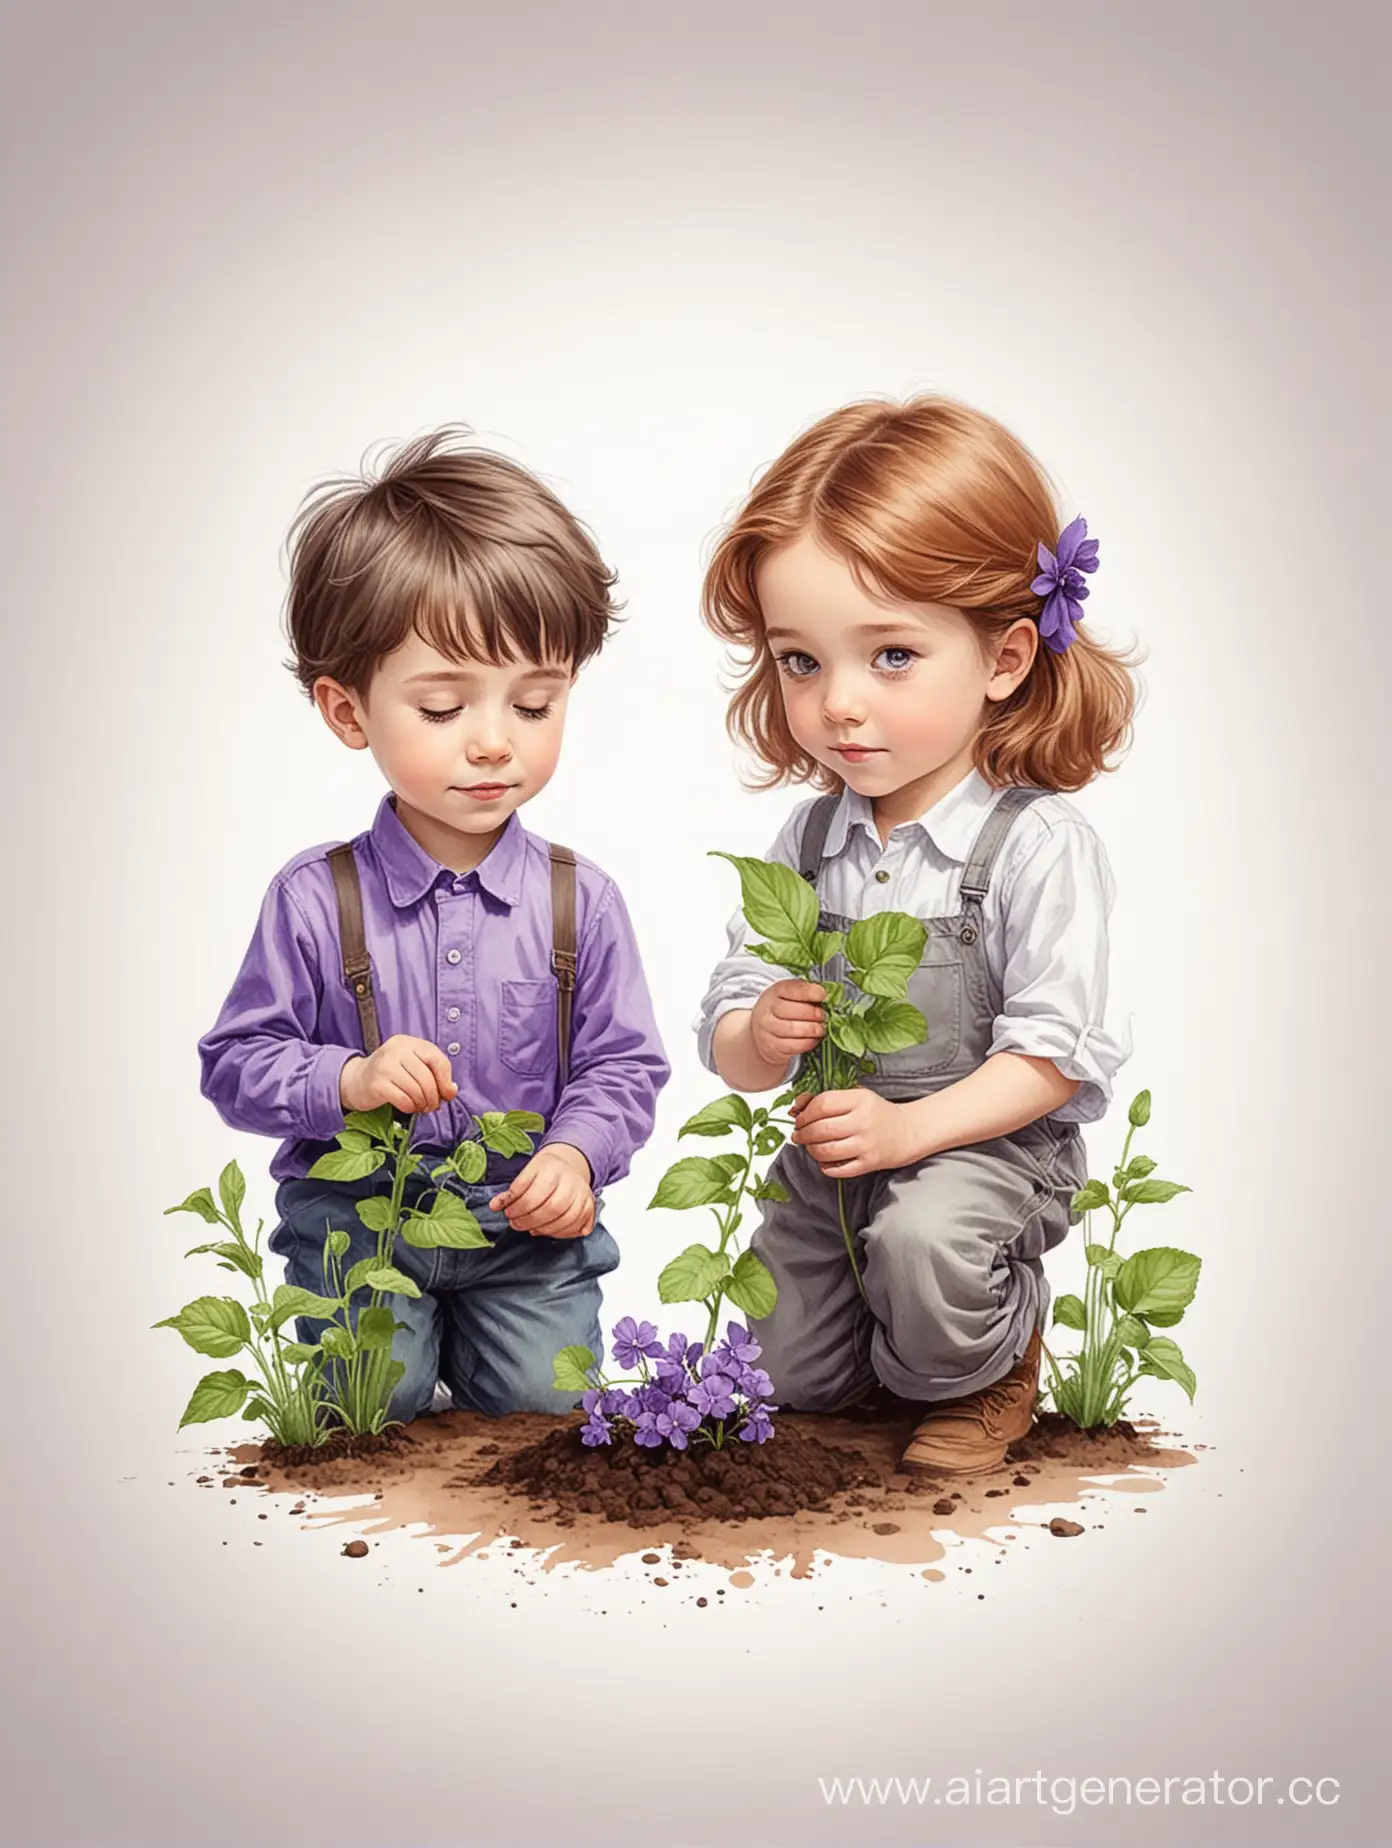 Children-Planting-Violets-Playful-Boy-and-Girl-Gardening-on-White-Background